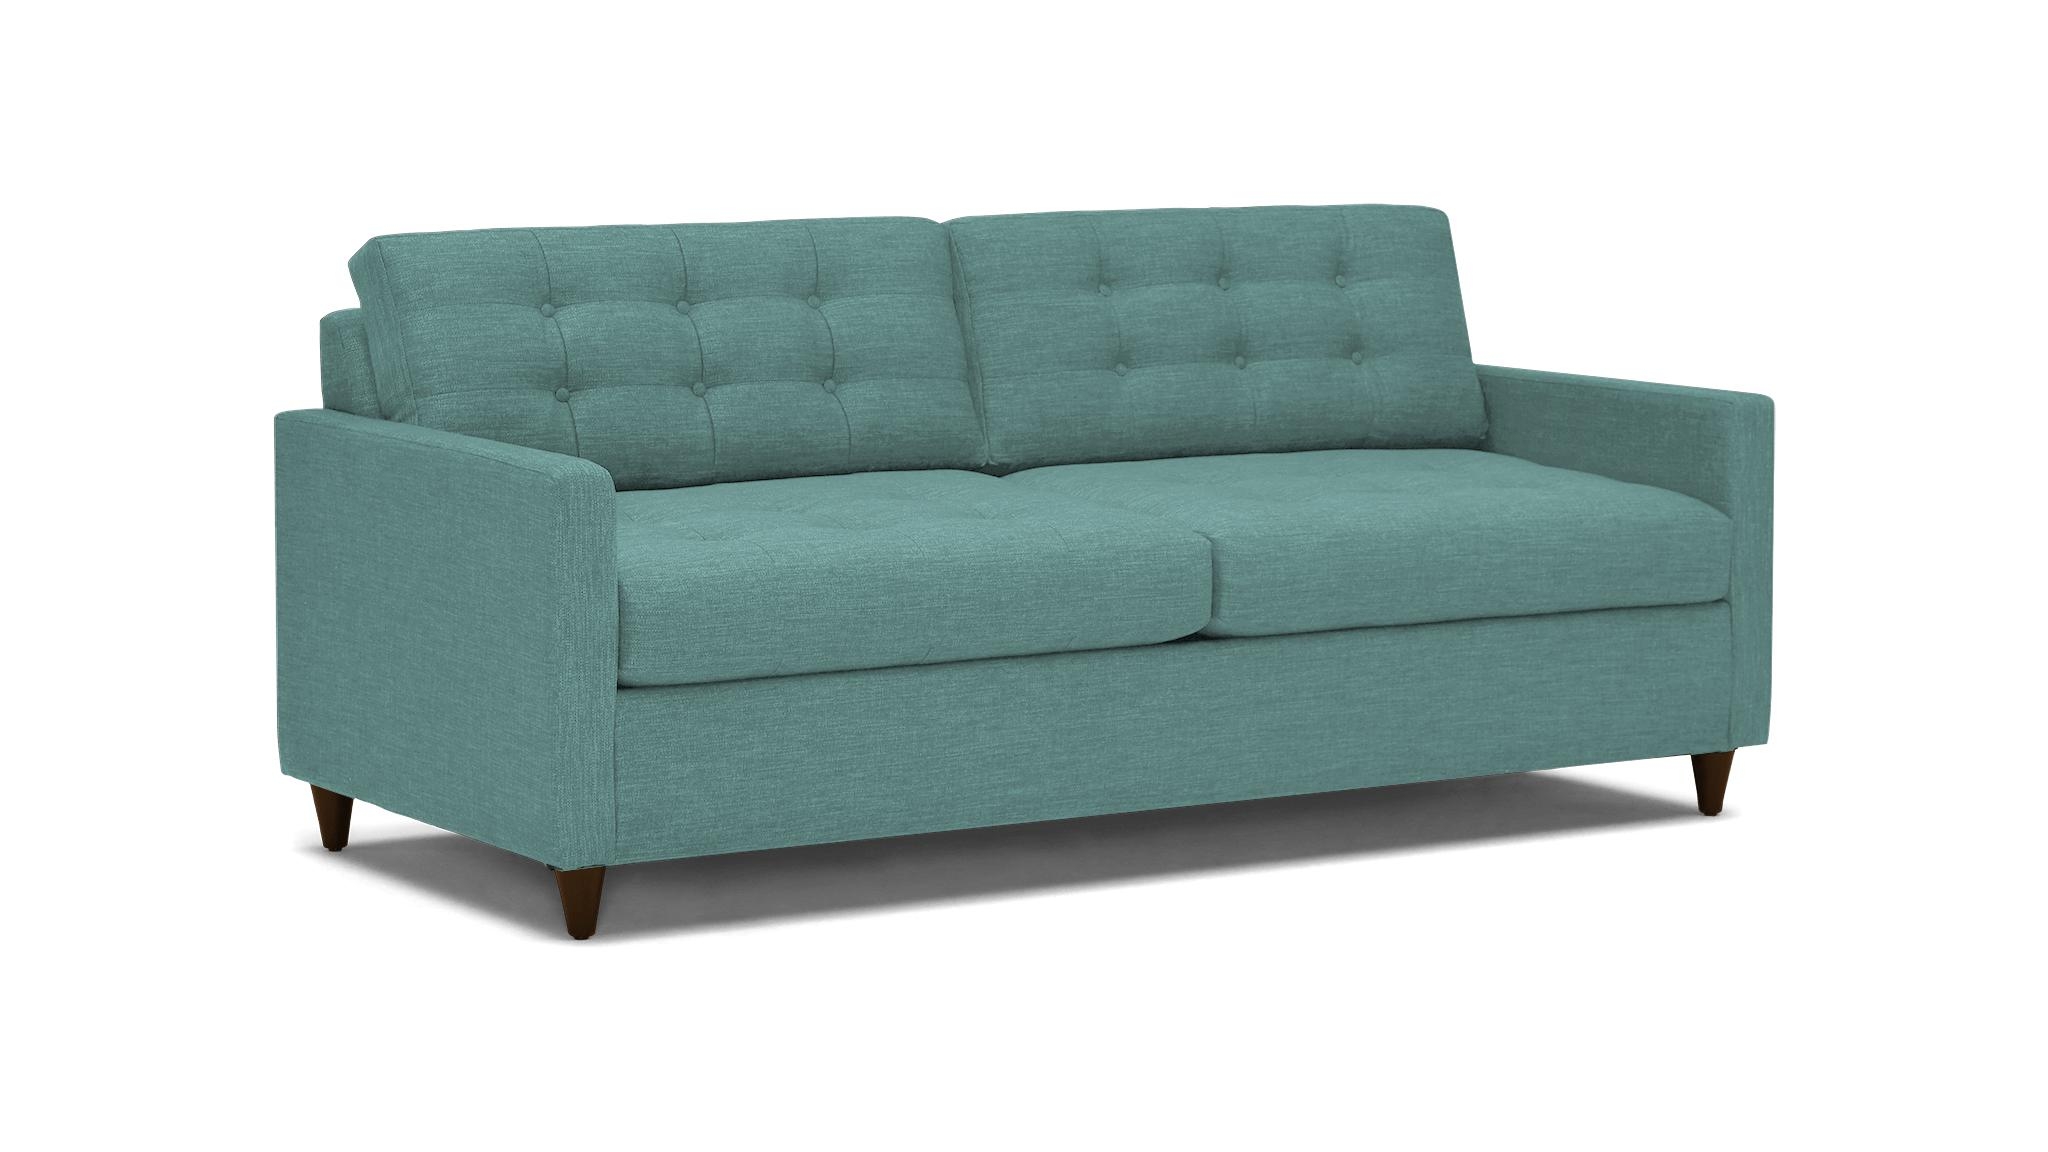 Green Eliot Mid Century Modern Sleeper Sofa - Essence Aqua - Mocha - Standard Foam - Image 1